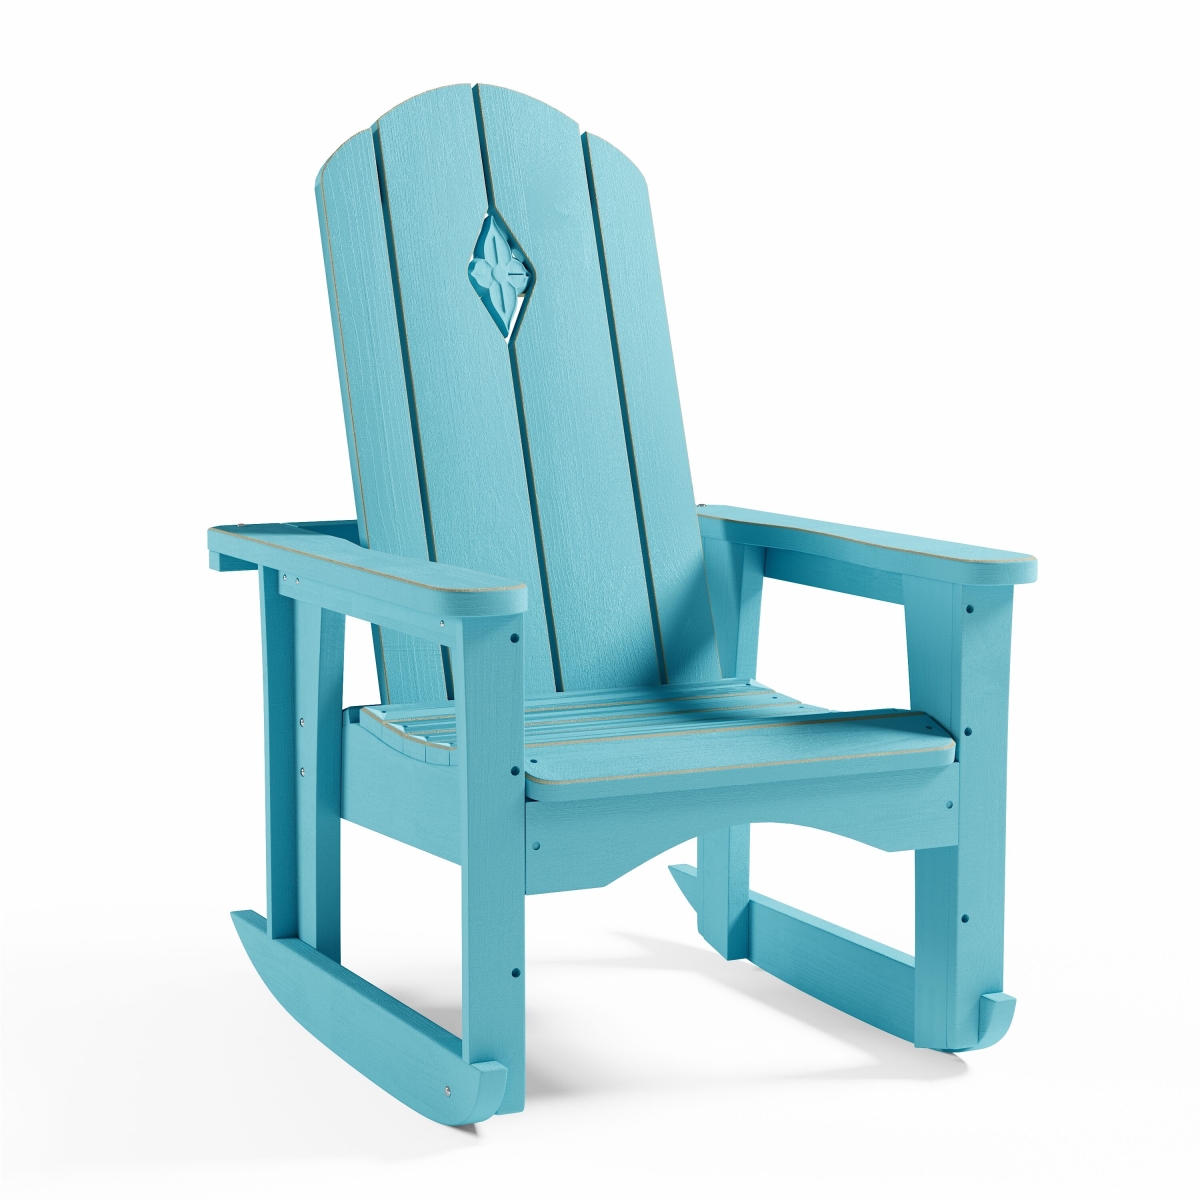 Hogan Supplies Cali Wood Rocker Lounge Chair, Robins Egg Pine - 30 x 33.5 x 42 in.